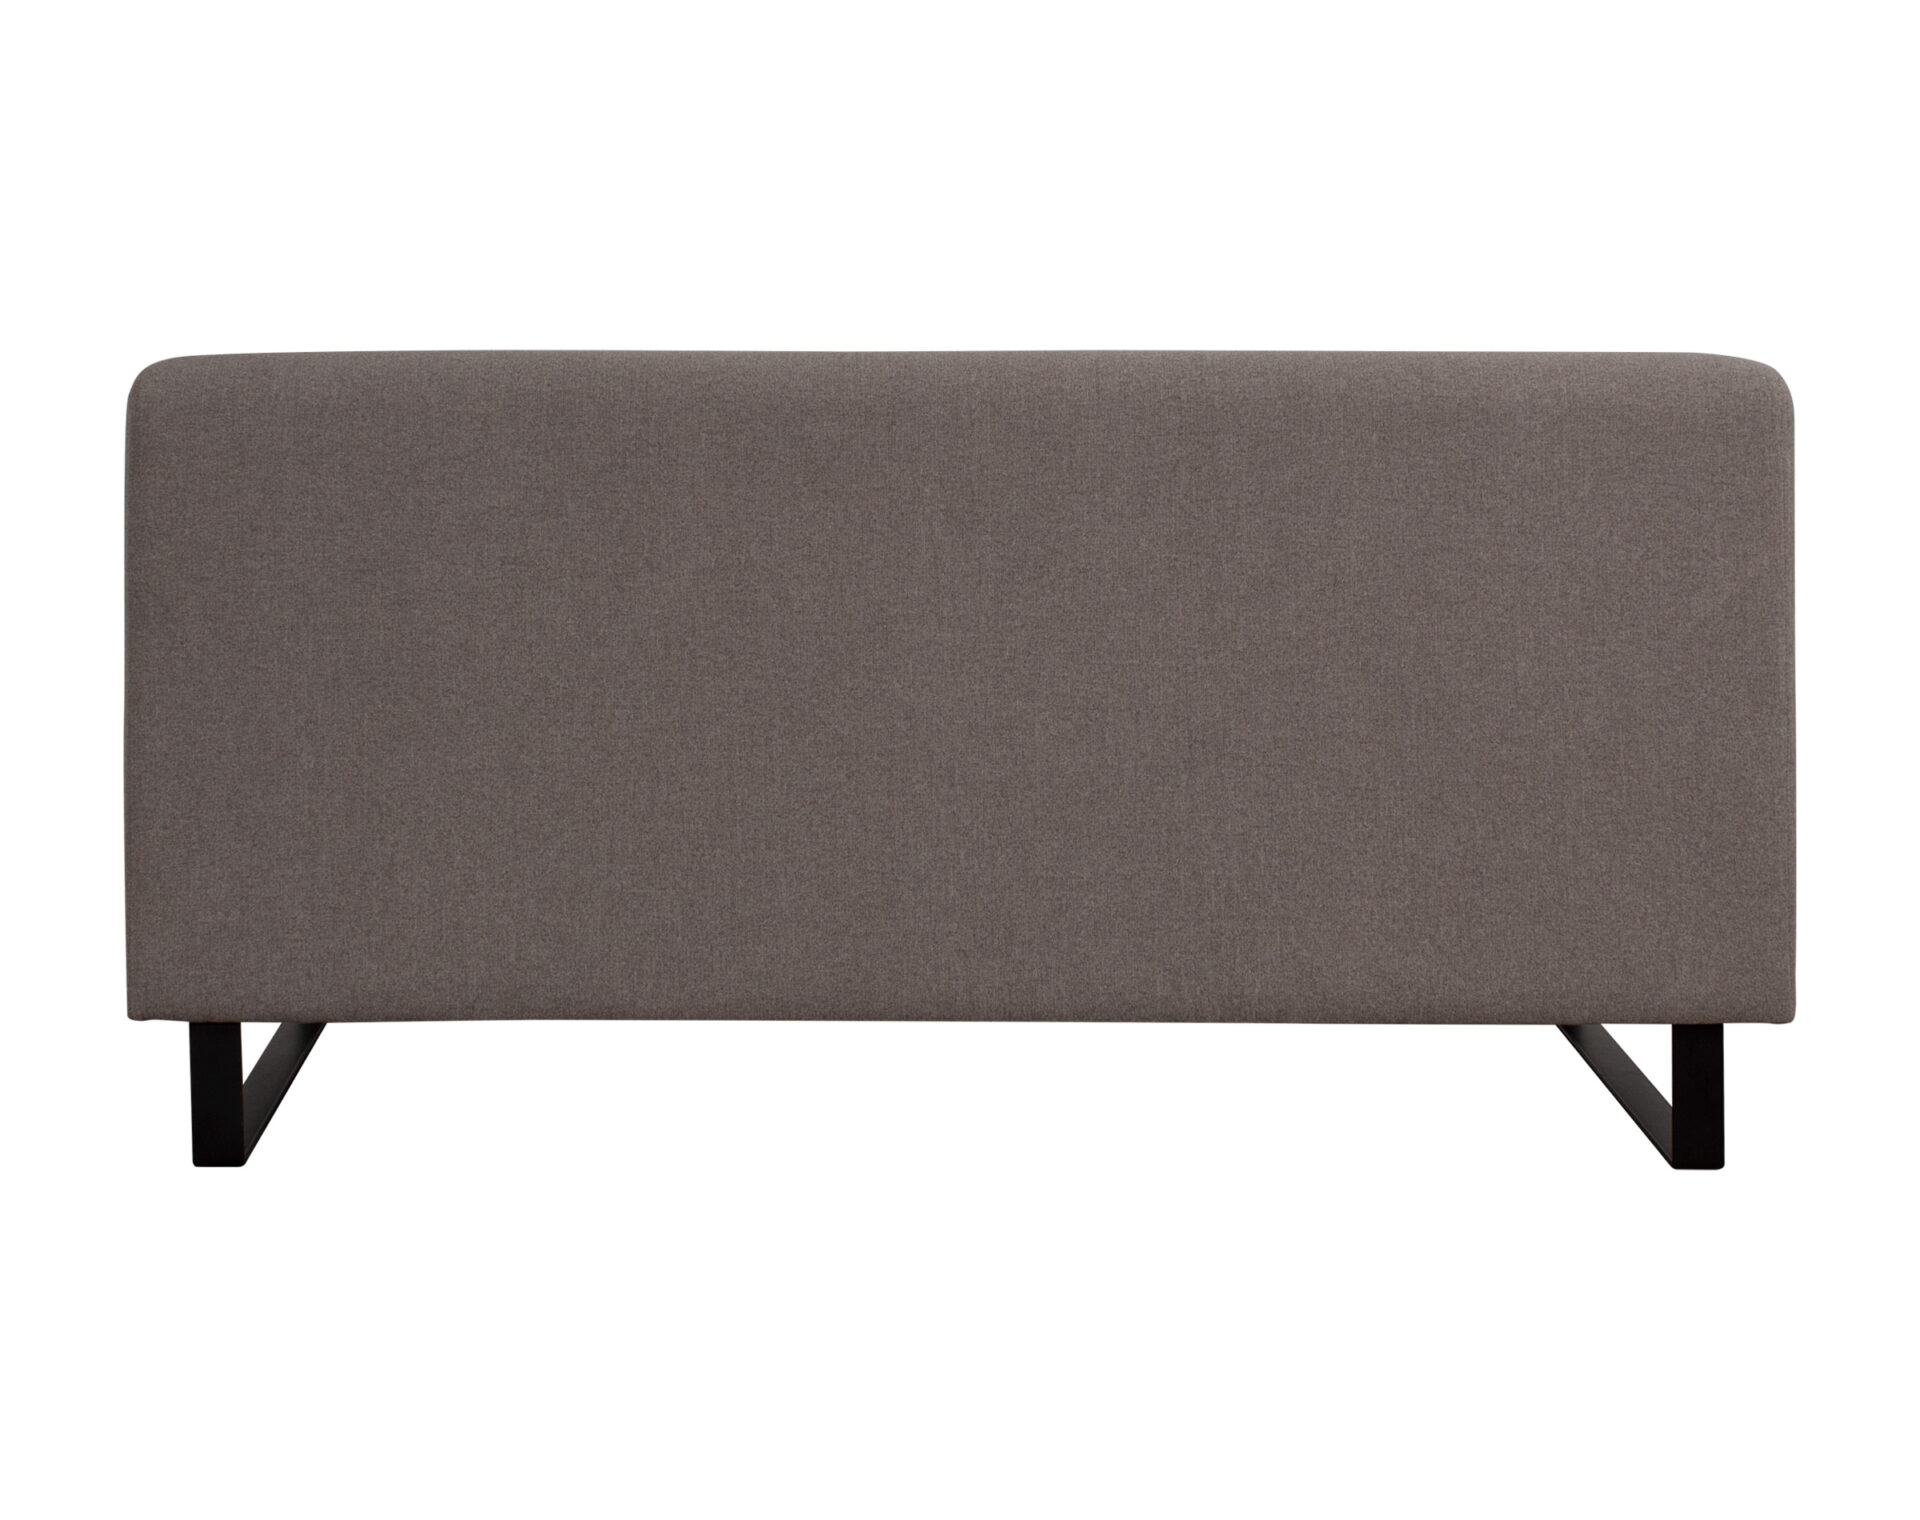 sofa empresa asiento pegado tela vv27 y zocalo metalico negro trasera